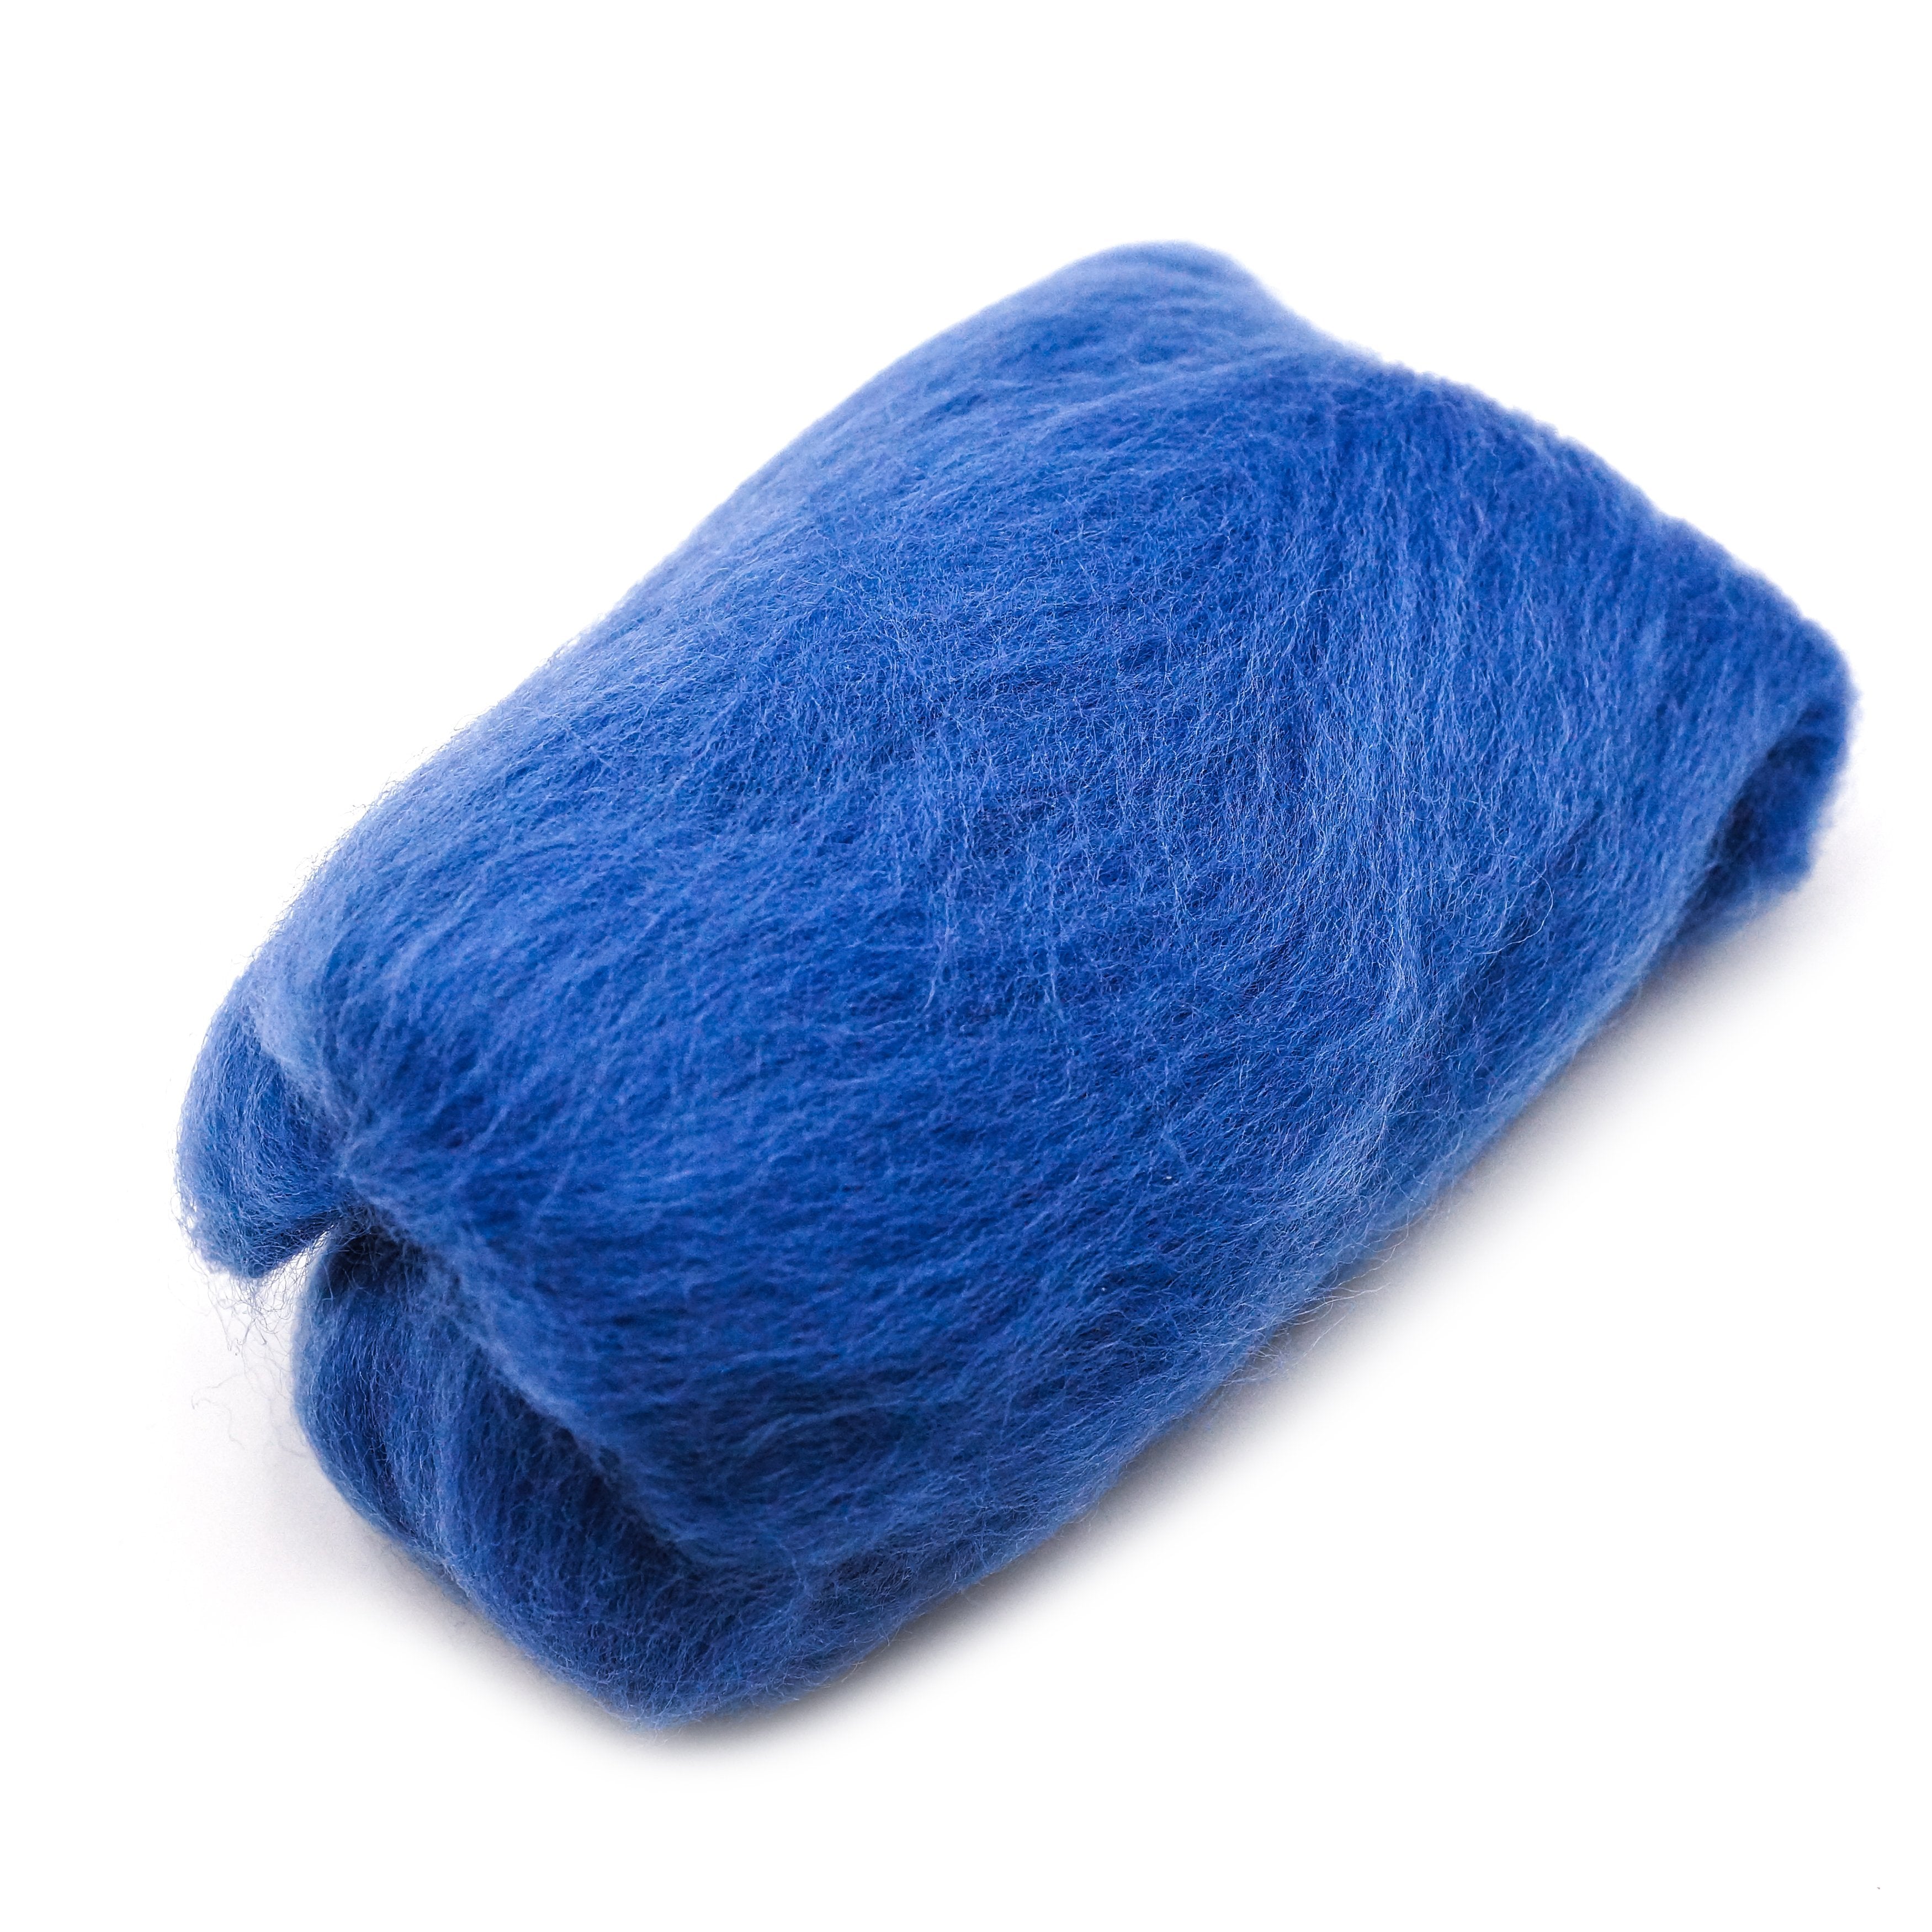 CLV - Natural Wool Roving (Blue)